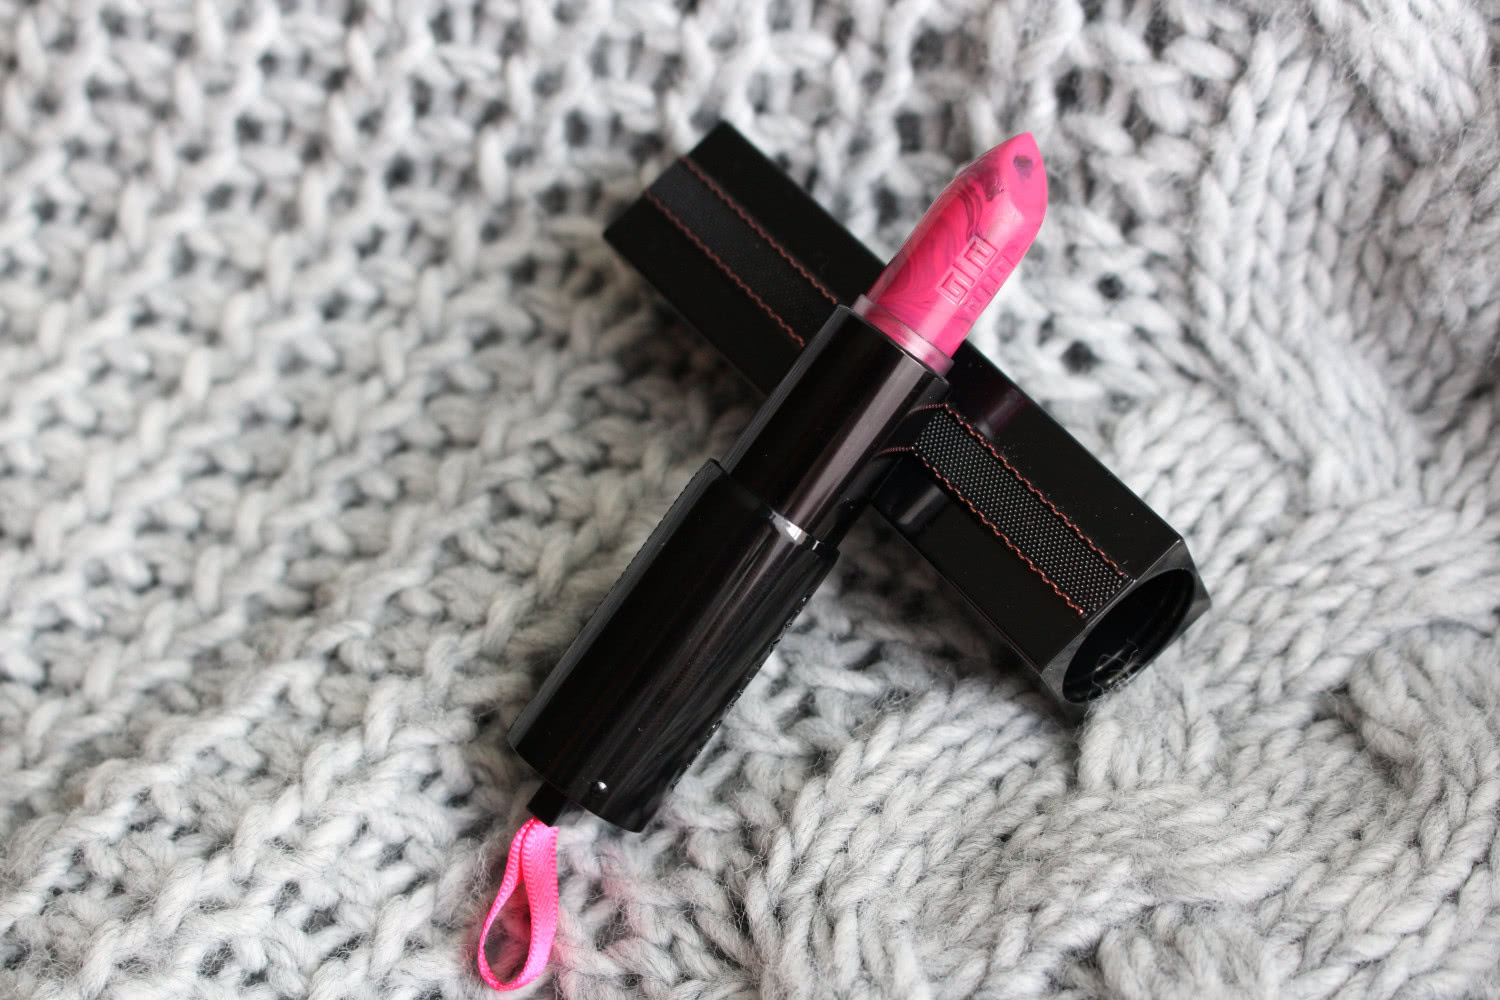 Givenchy Rouge Interdit Marbled Lipstick 27 Rose Revelateur